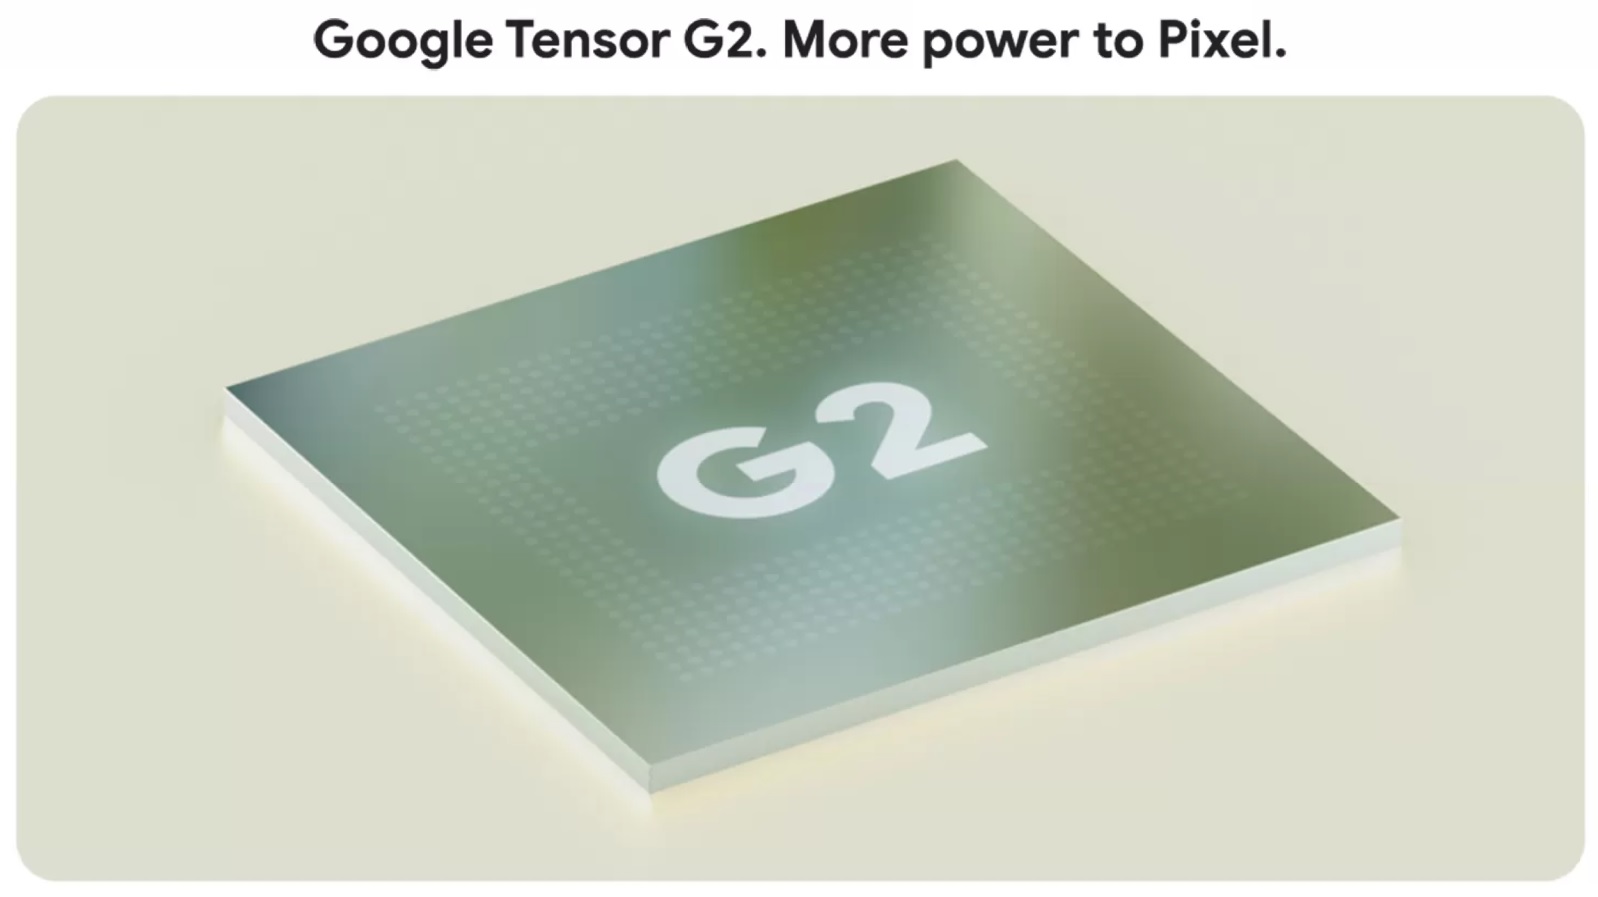 Google Tensor G2 Chip launch soon